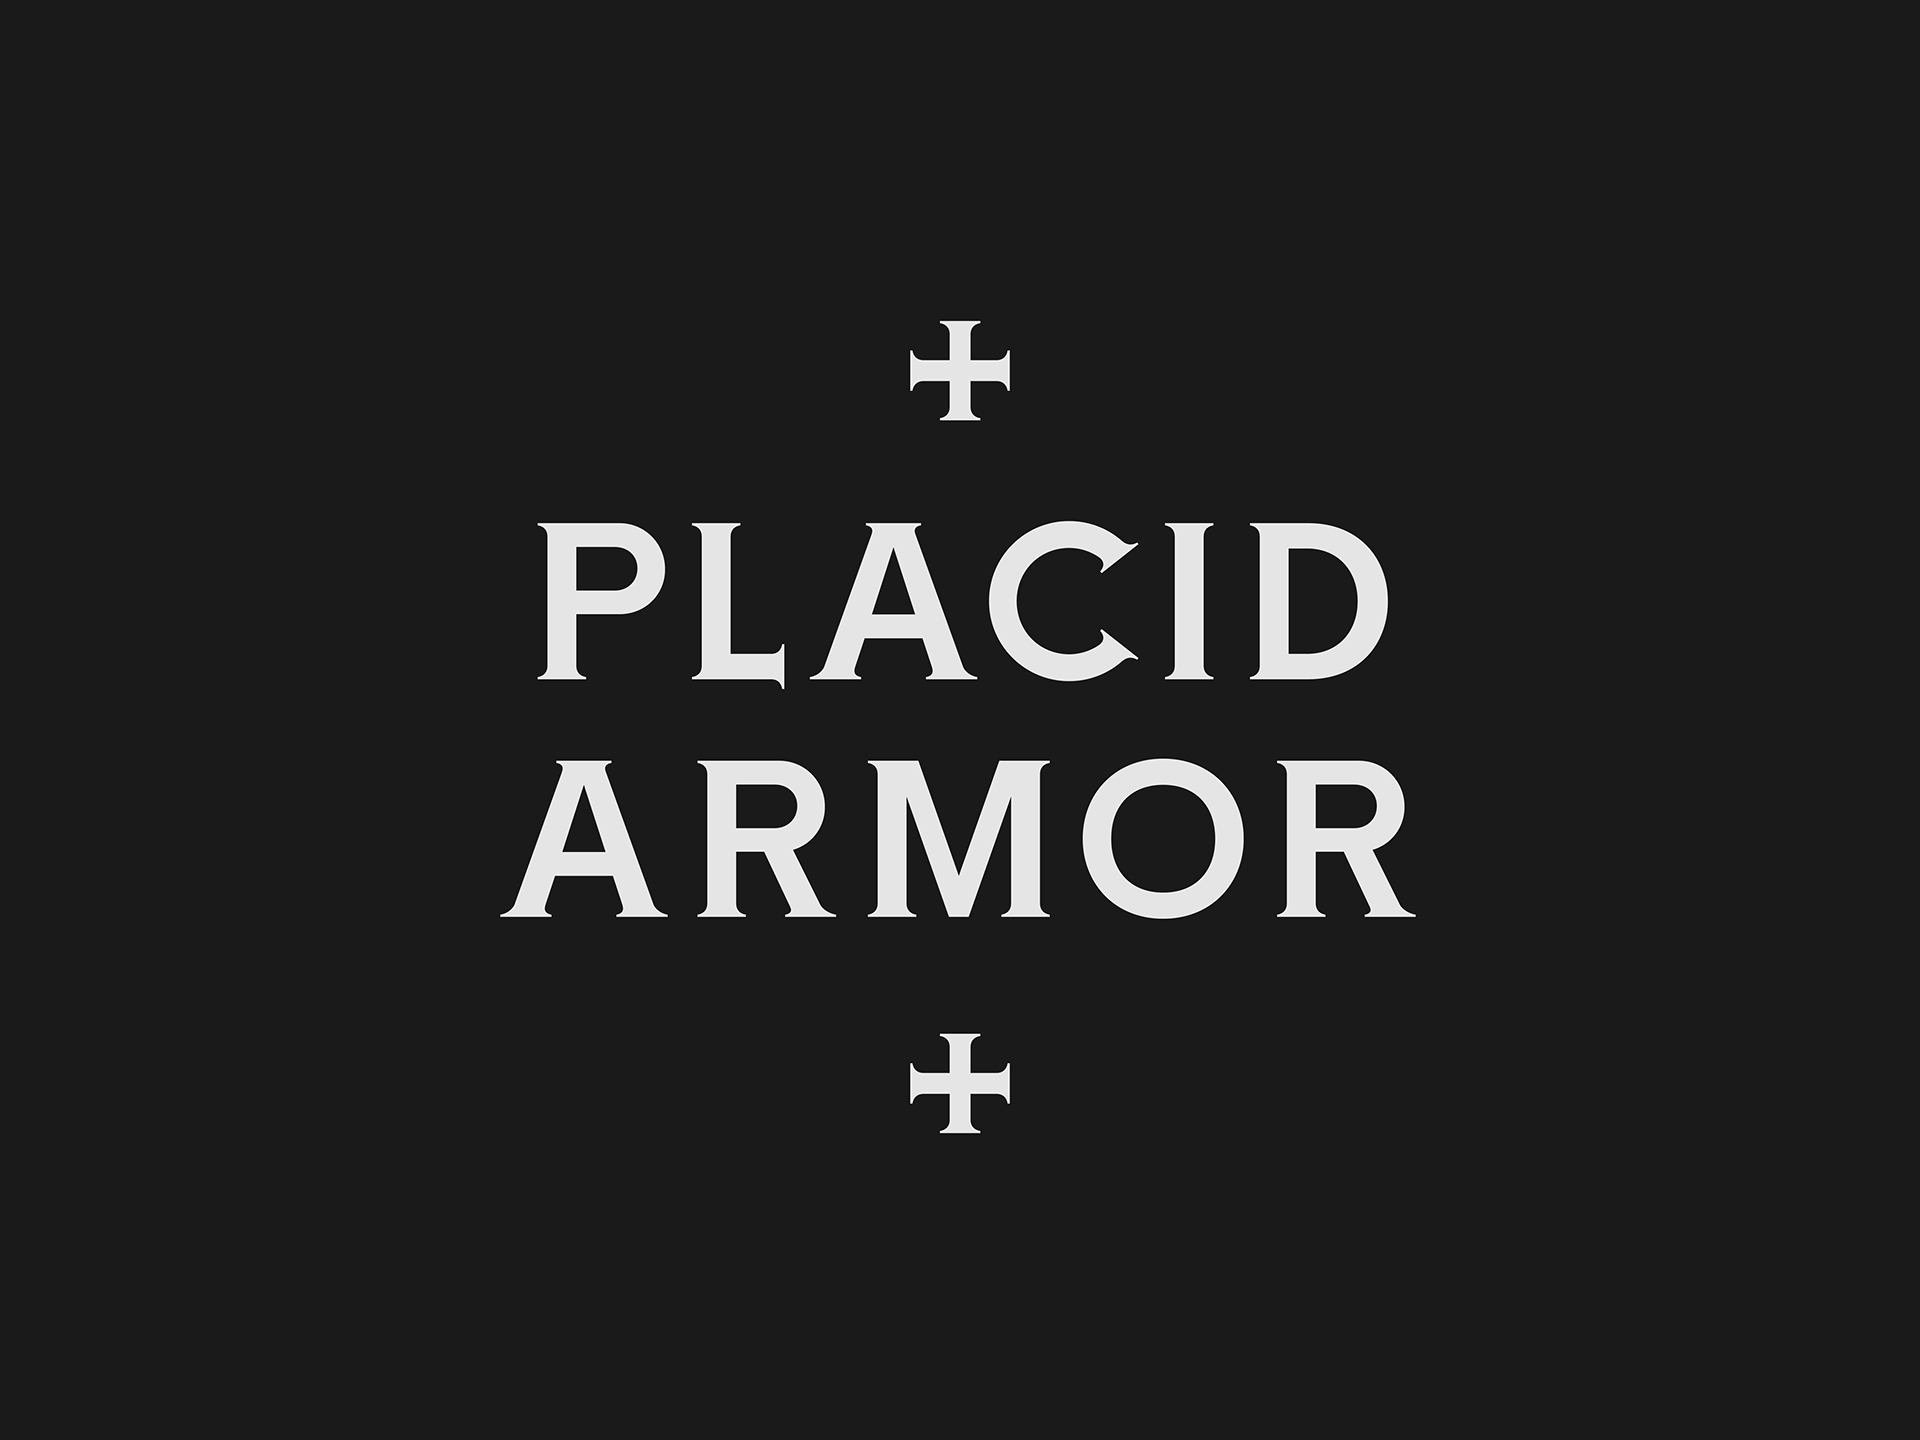 Placid Armor